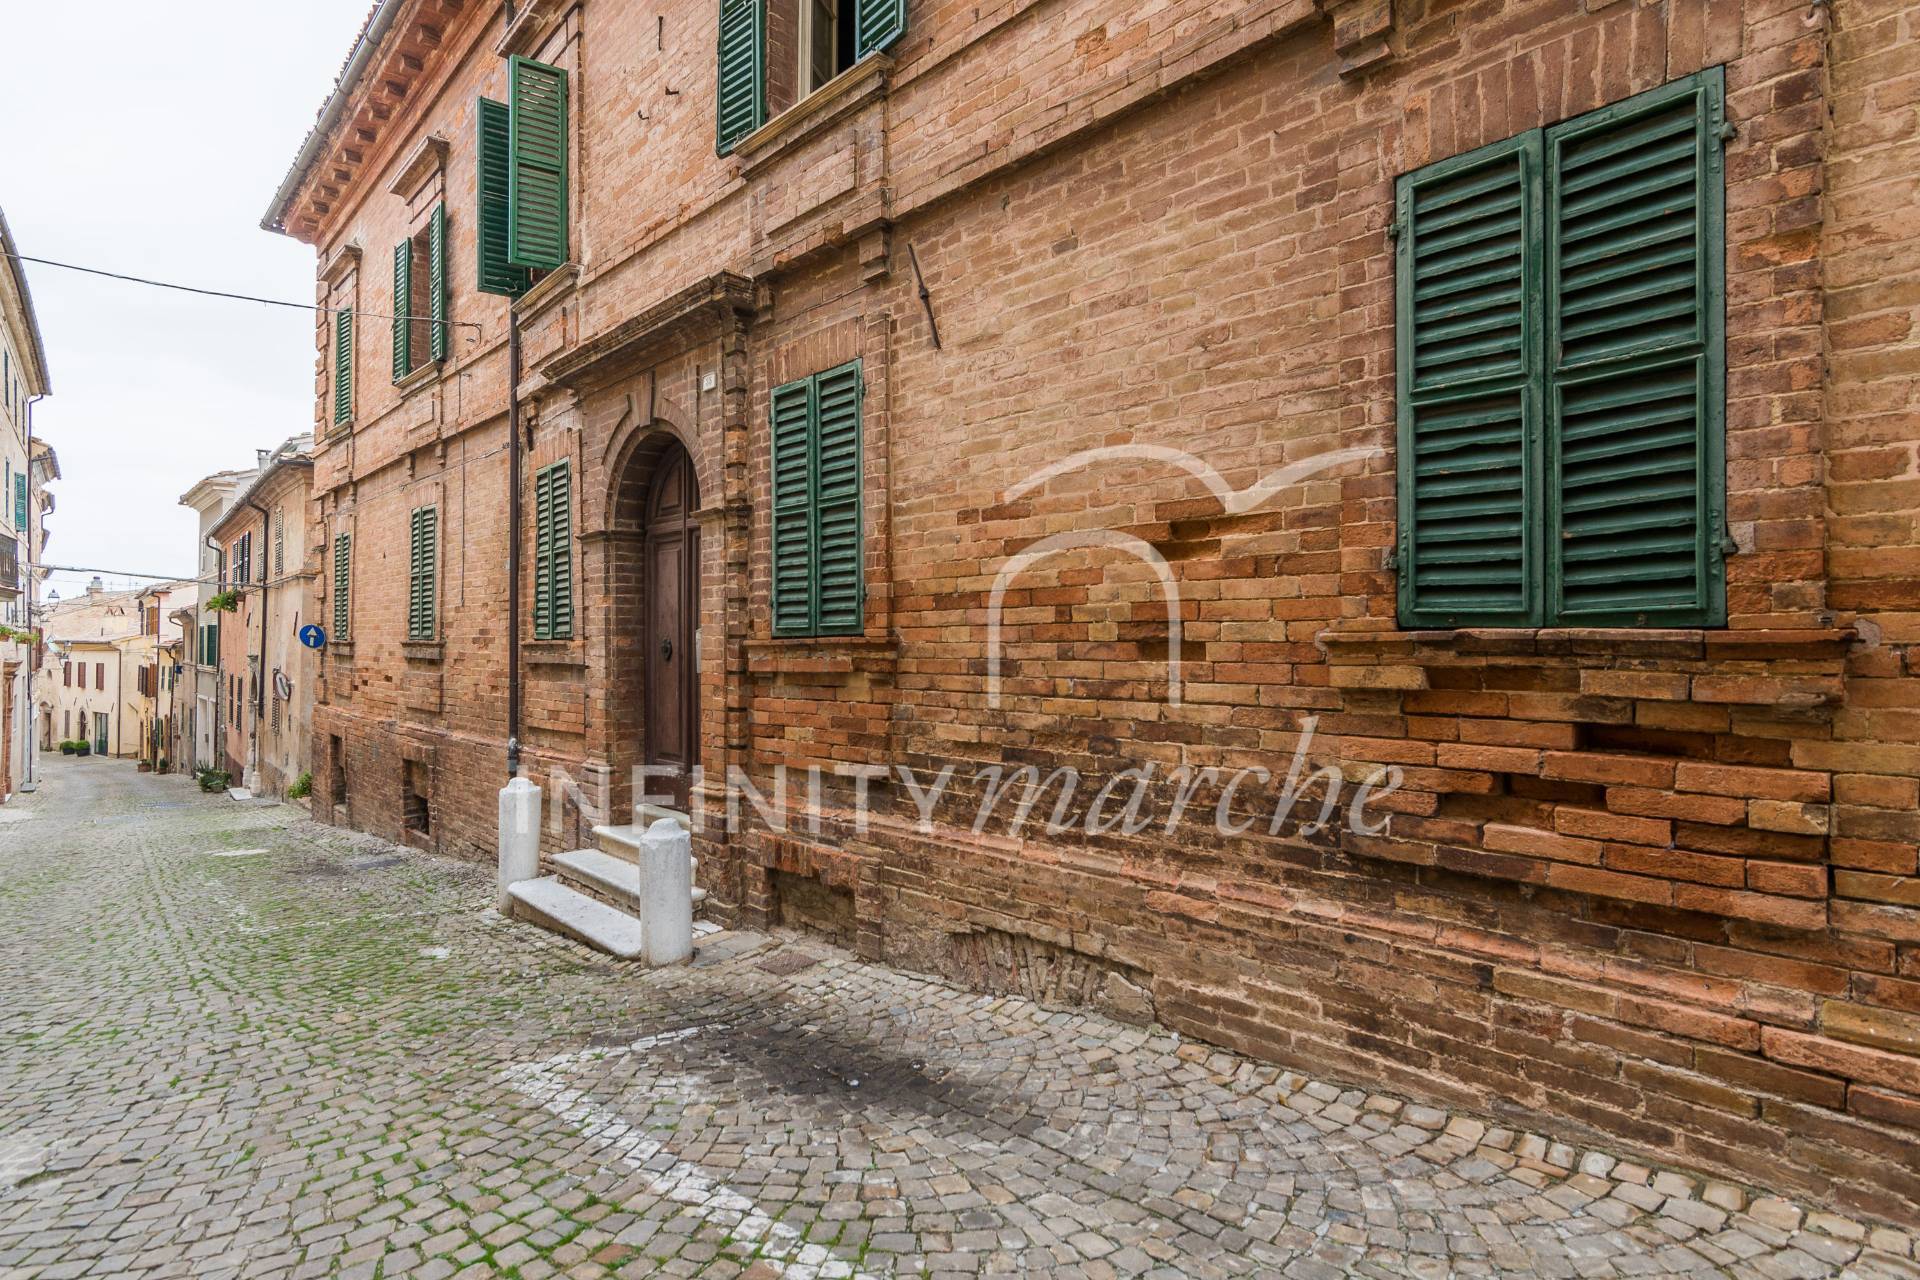 Historical Building in Montecarotto (Ancona)